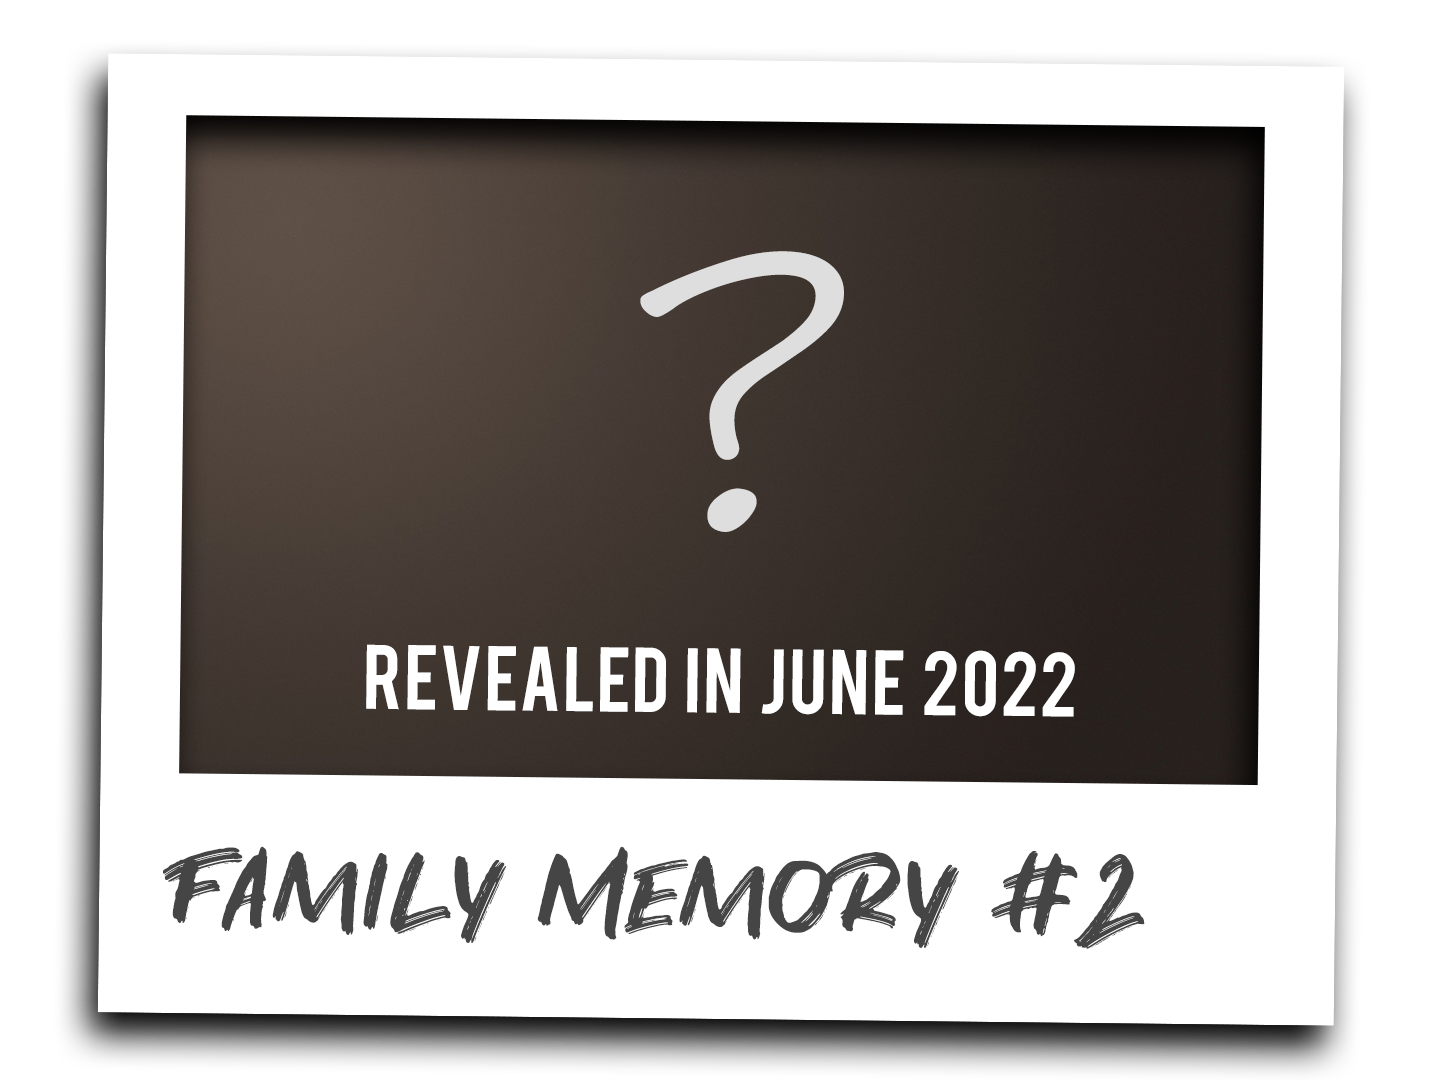 Family Memory #2